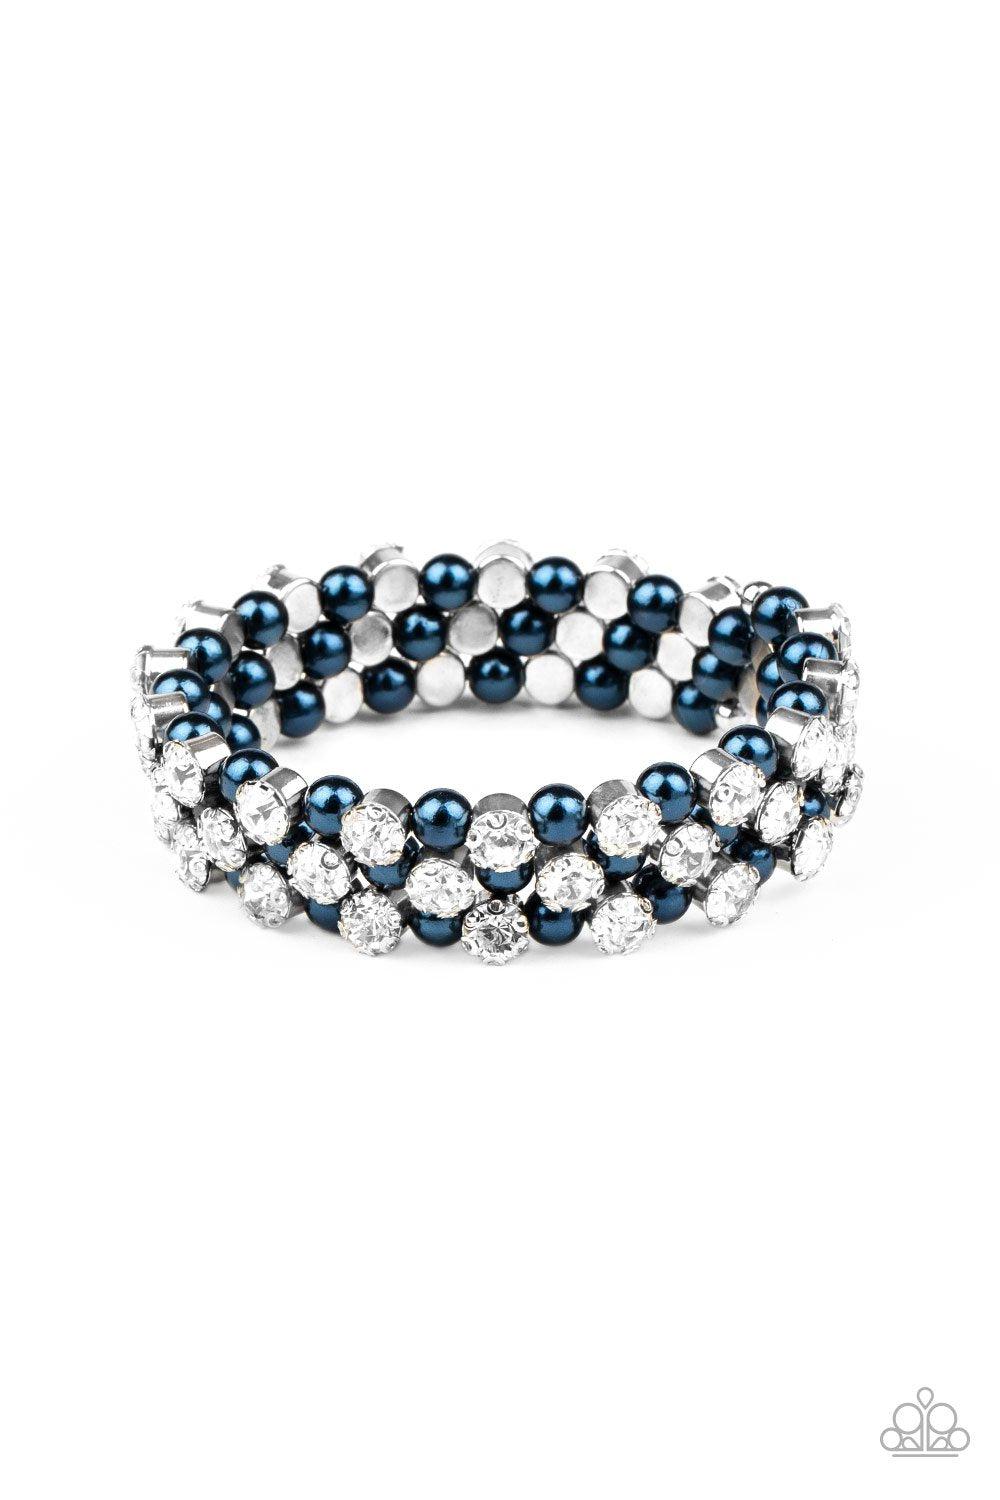 Metro Motif Blue Pearl and White Rhinestone Wire Wrap Bracelet - Paparazzi Accessories-CarasShop.com - $5 Jewelry by Cara Jewels